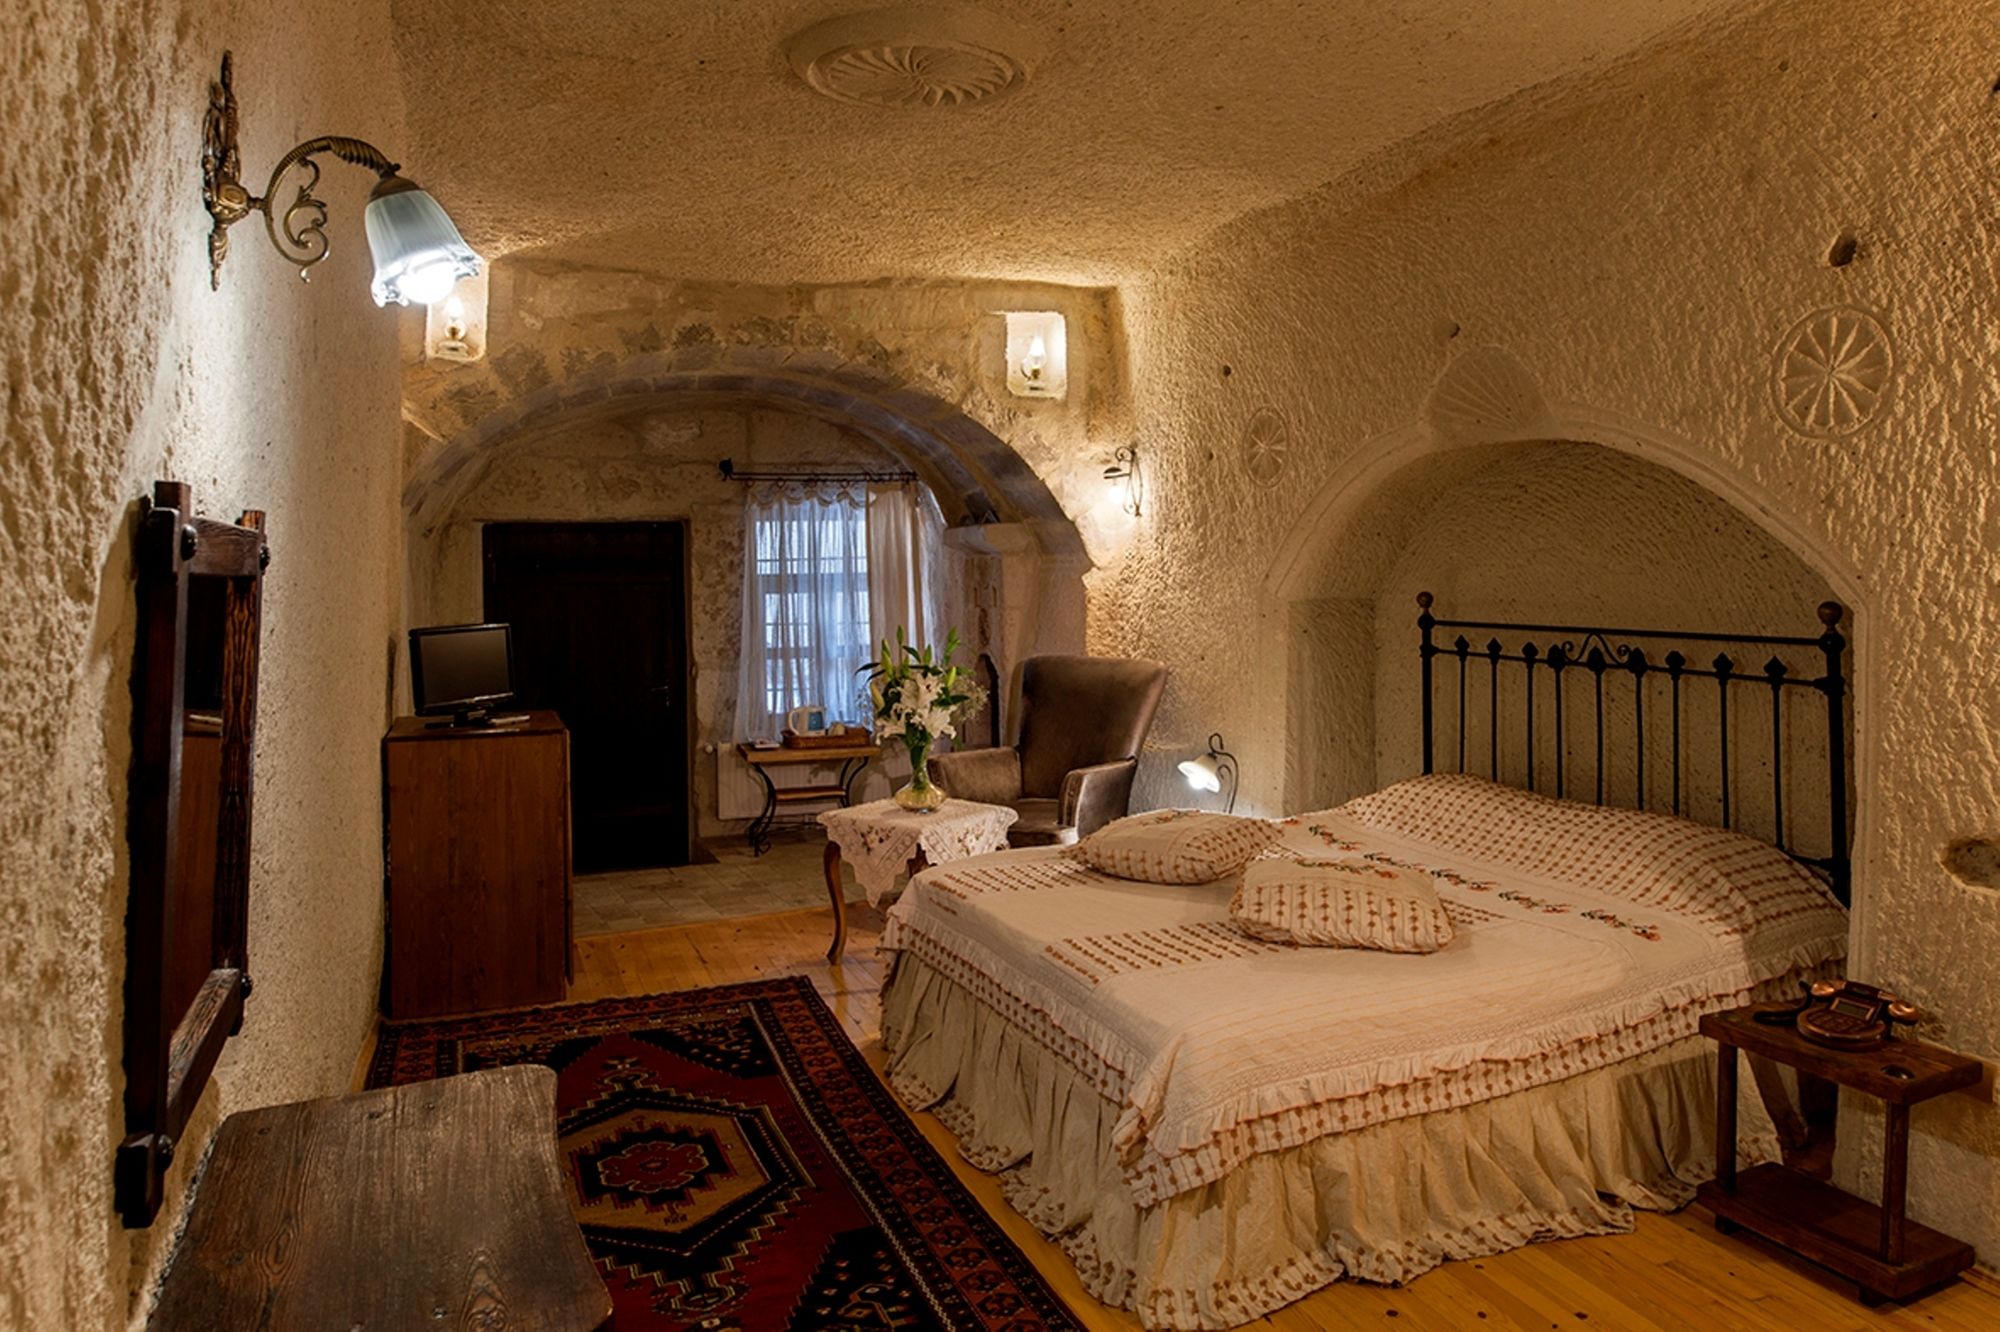 Aydinli Cave Hotel